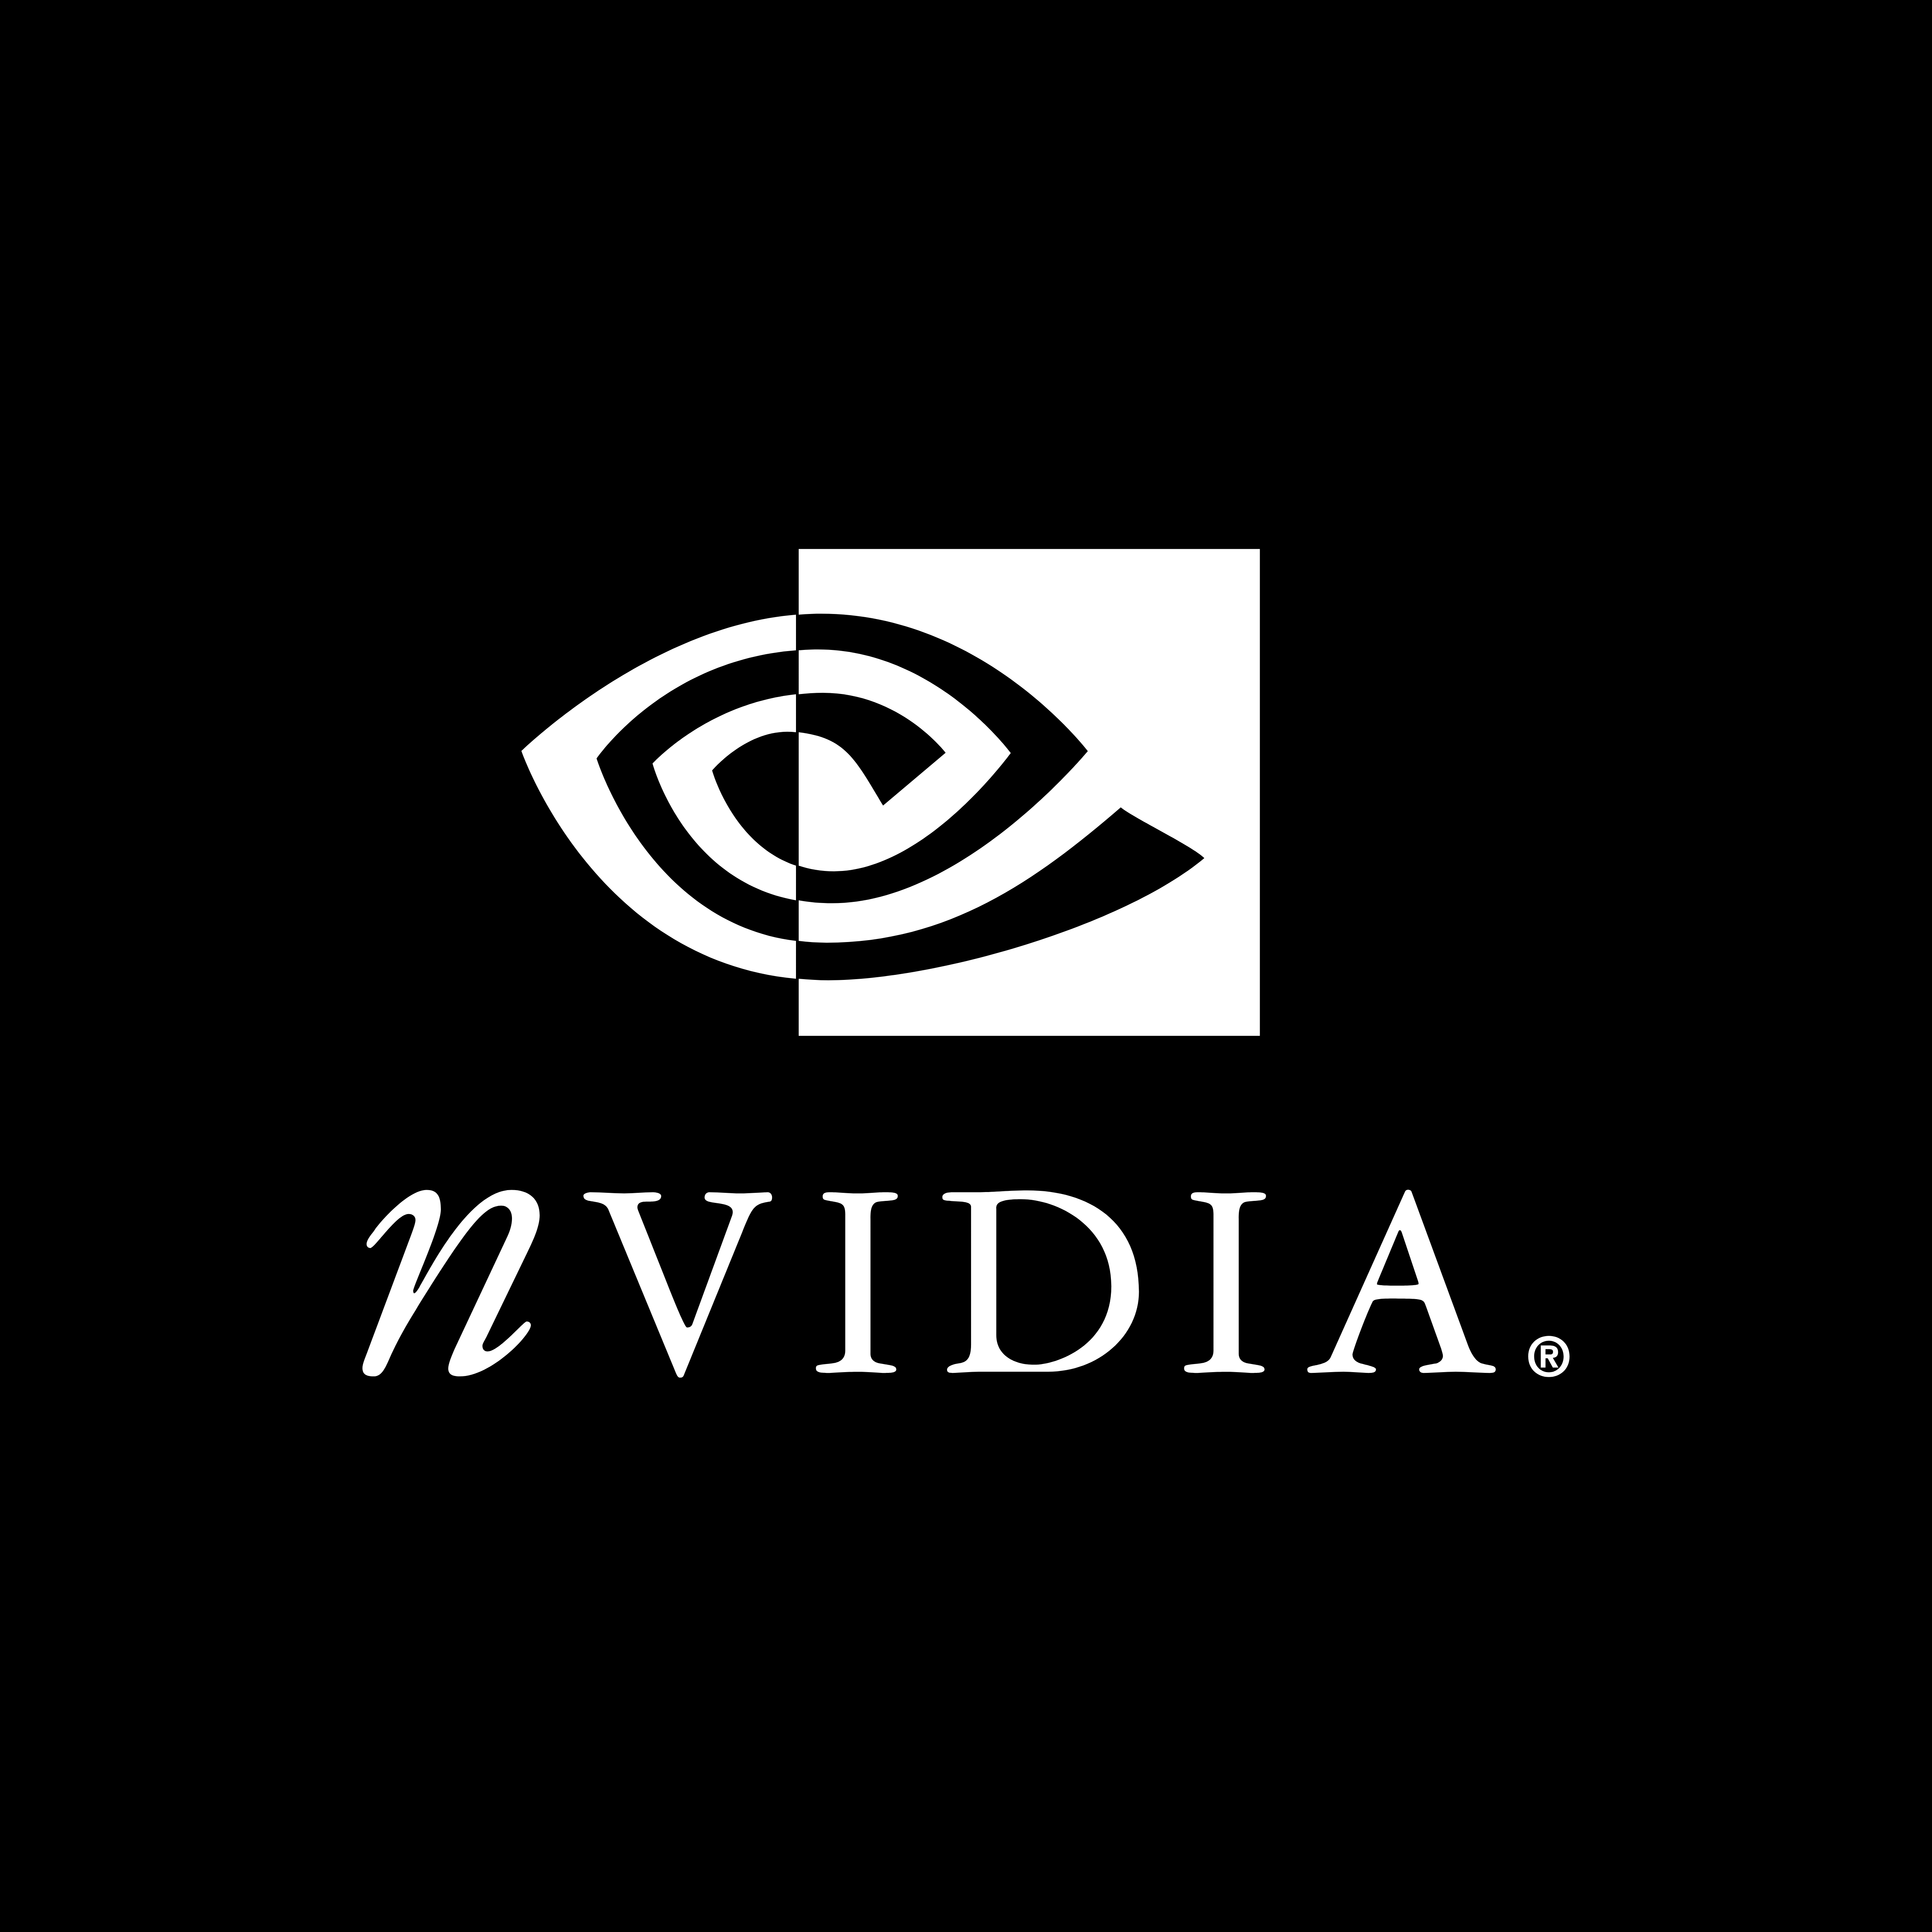 Инвидеа. NVIDIA. NVIDIA эмблема. Логотип компании NVIDIA. NVIDIA вектор.